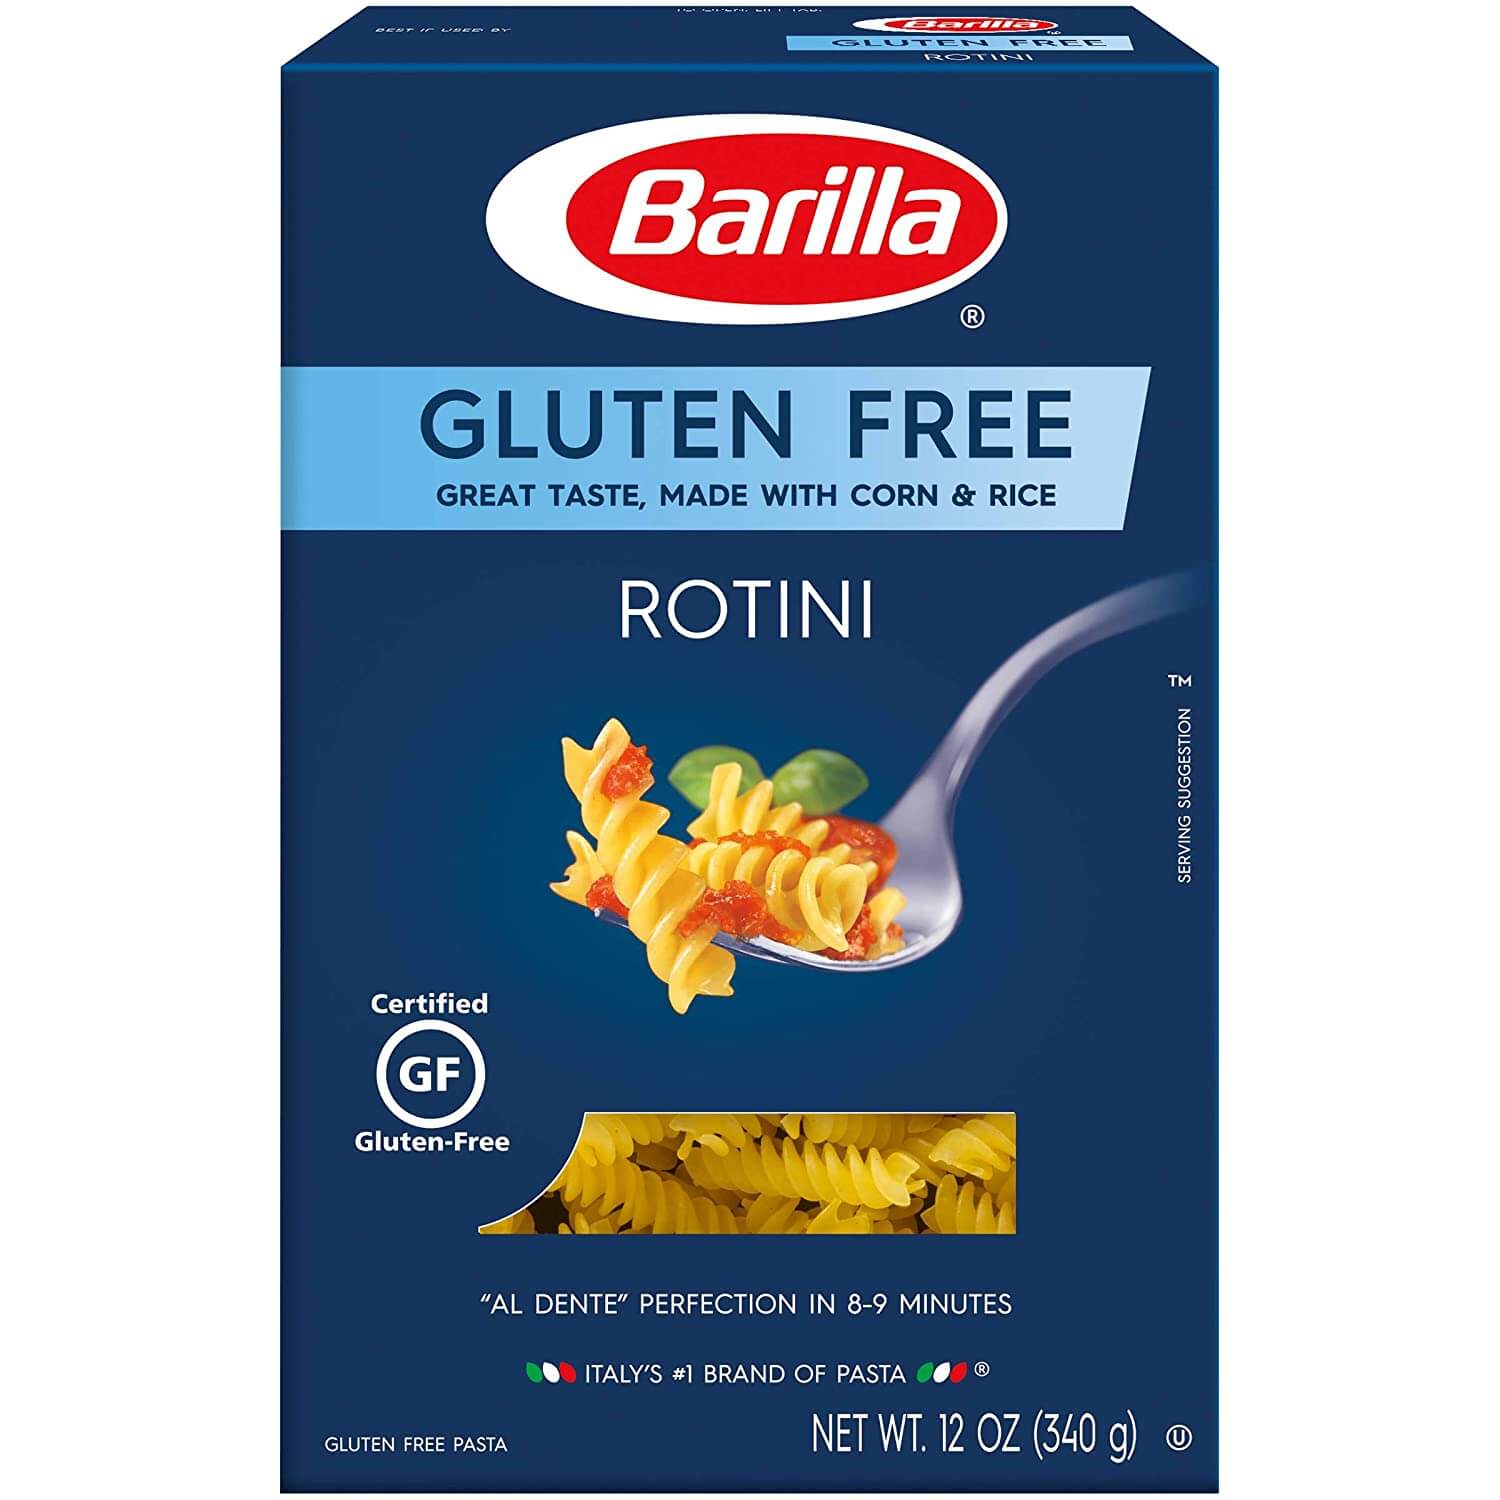 blue box with image of rotini pasta